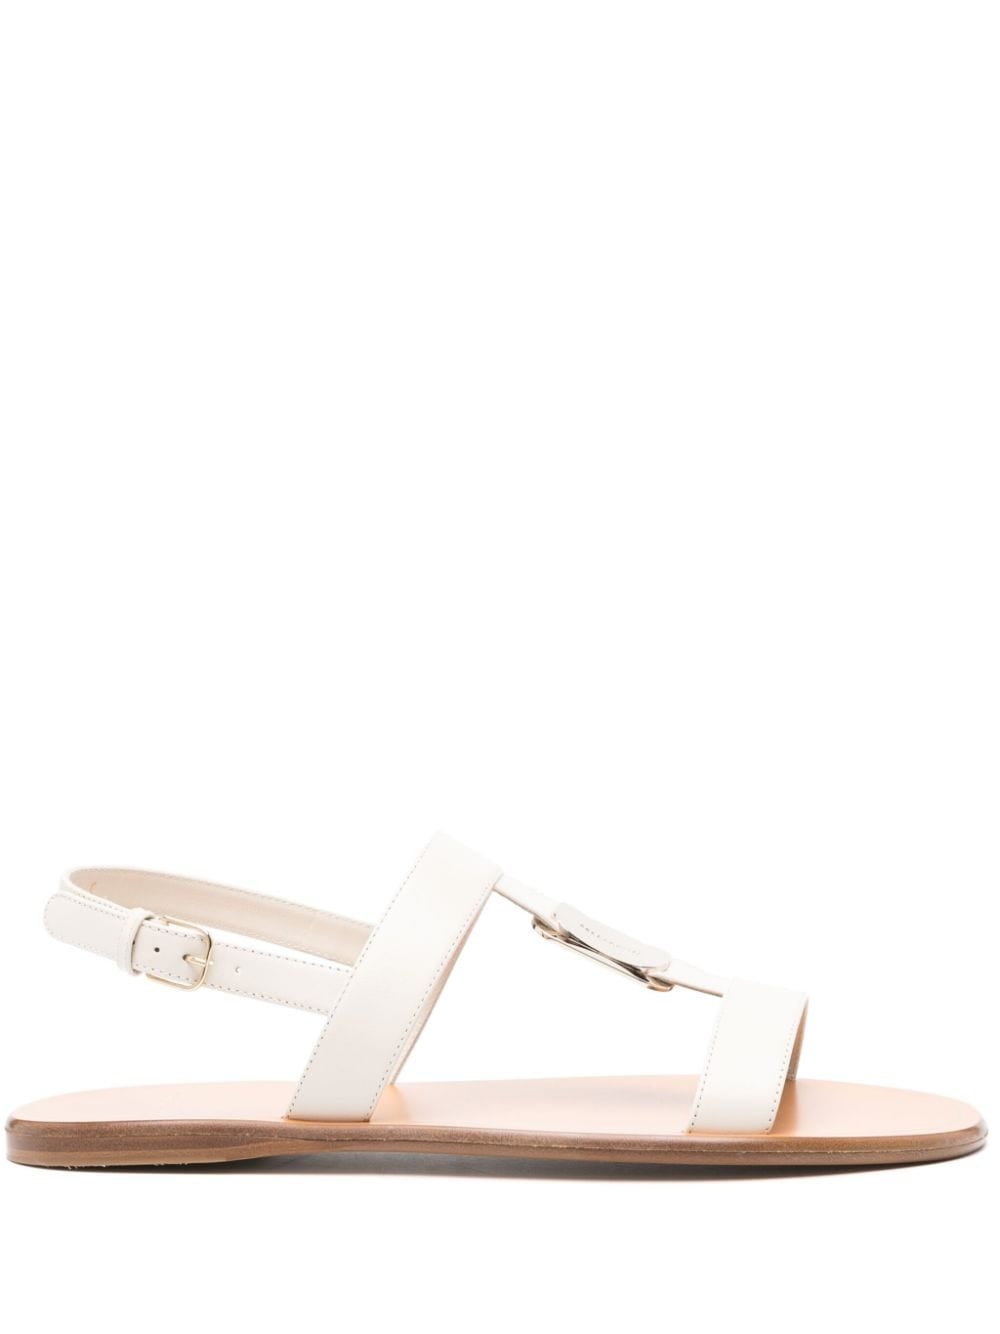 Capri leathers sandals - 1